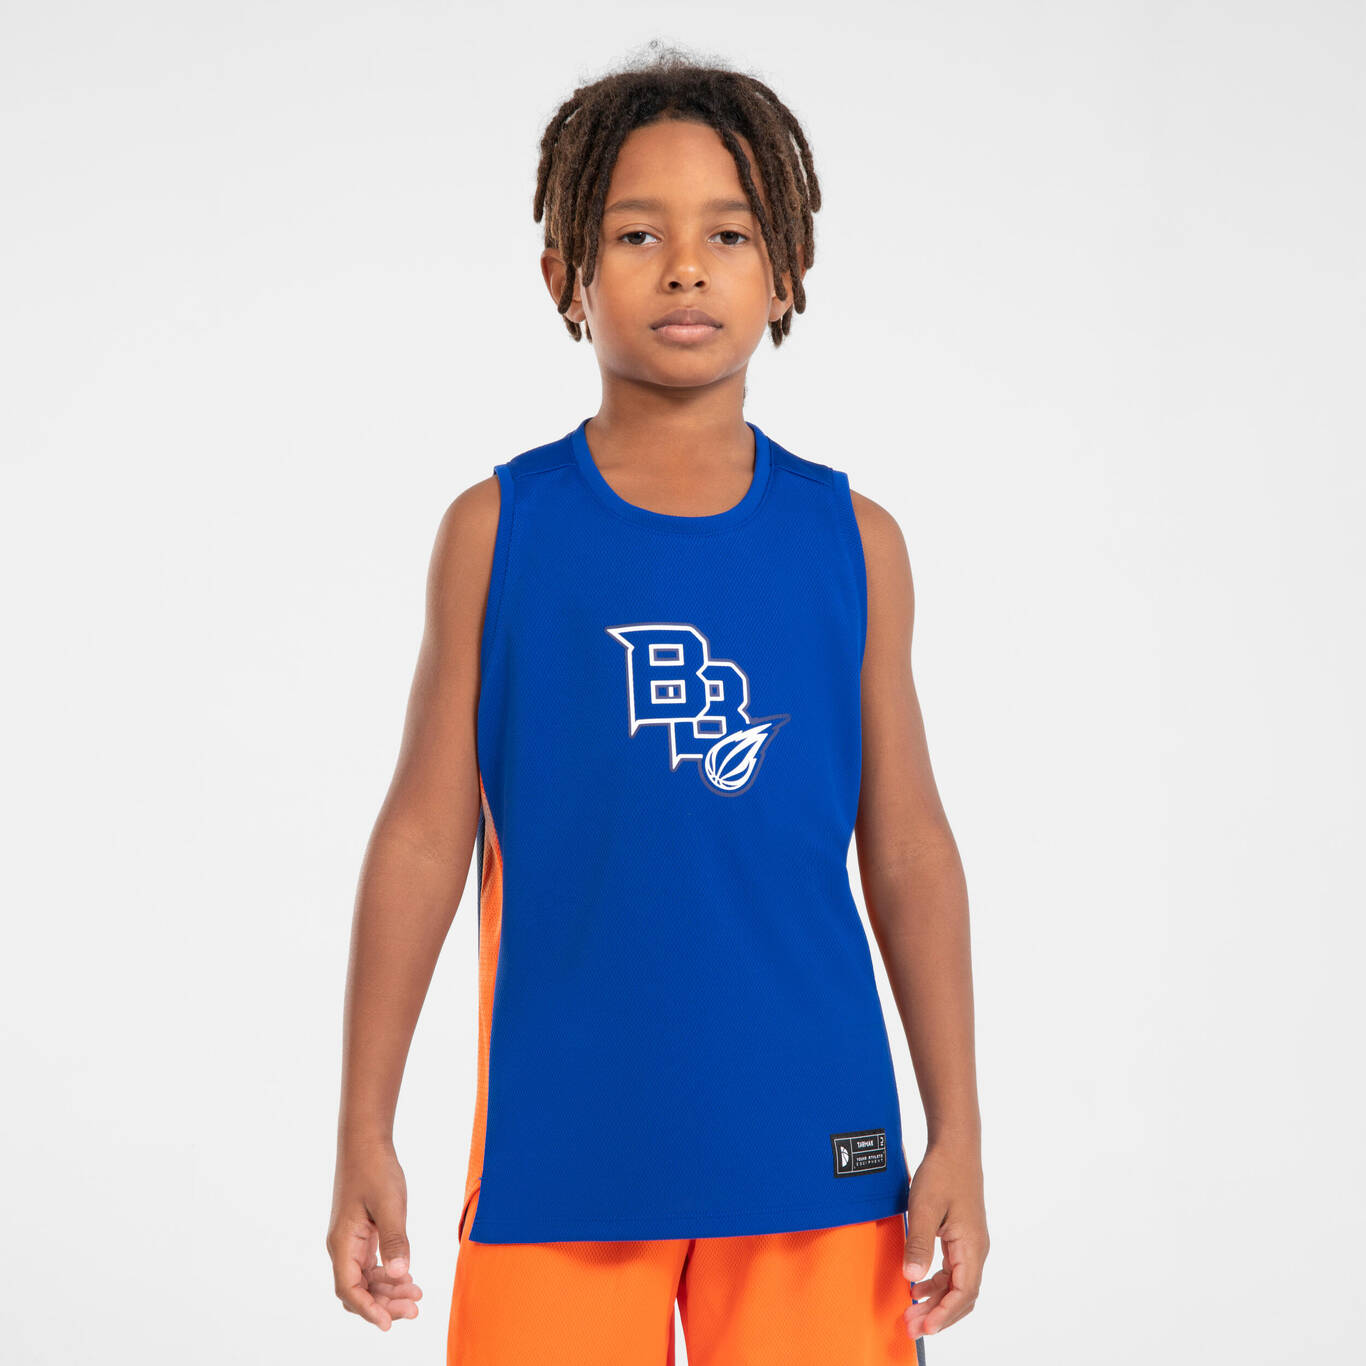 Kids' Jersey Basketball T500- Blue/orange